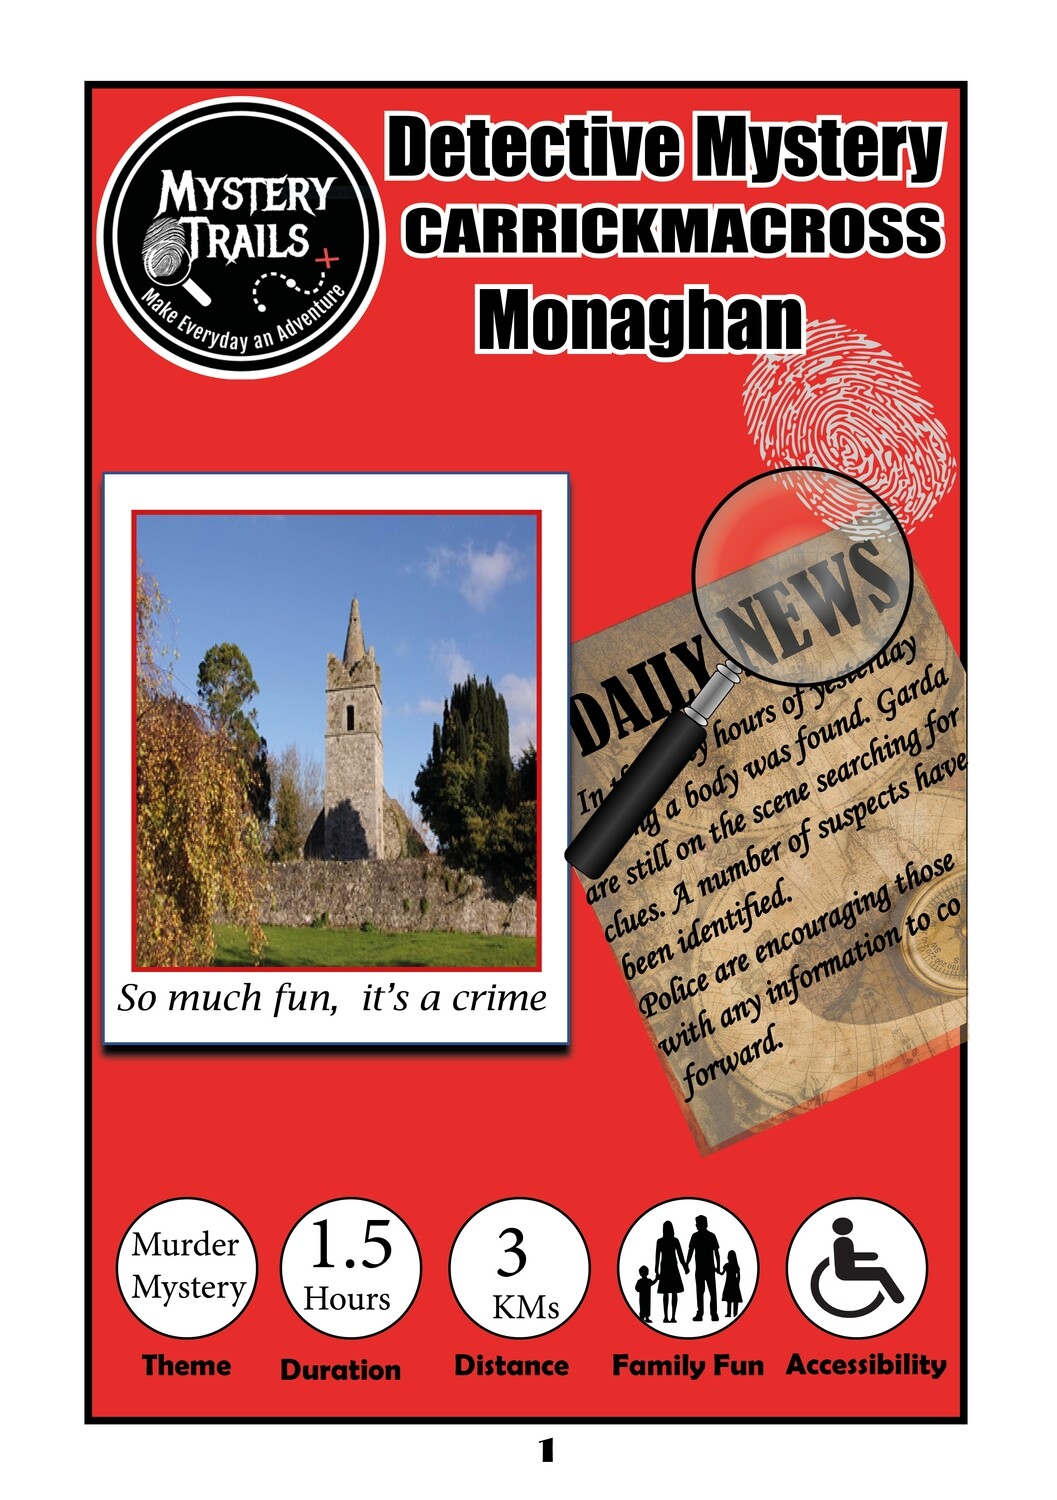 Carrickmacross- Detective Mystery - Monaghan